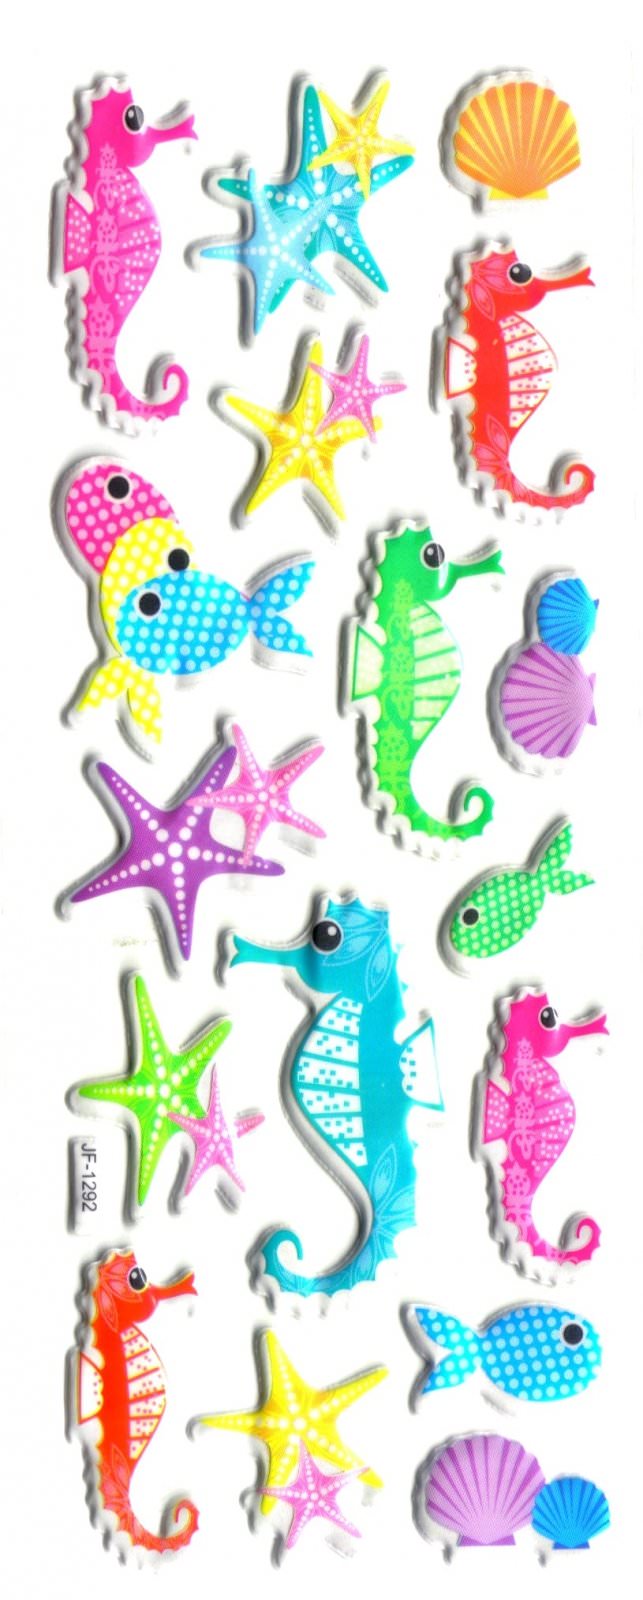 ocean hippocampe etoile coquillage poisson gommette sticker adhesif enfant decoration JF 1292